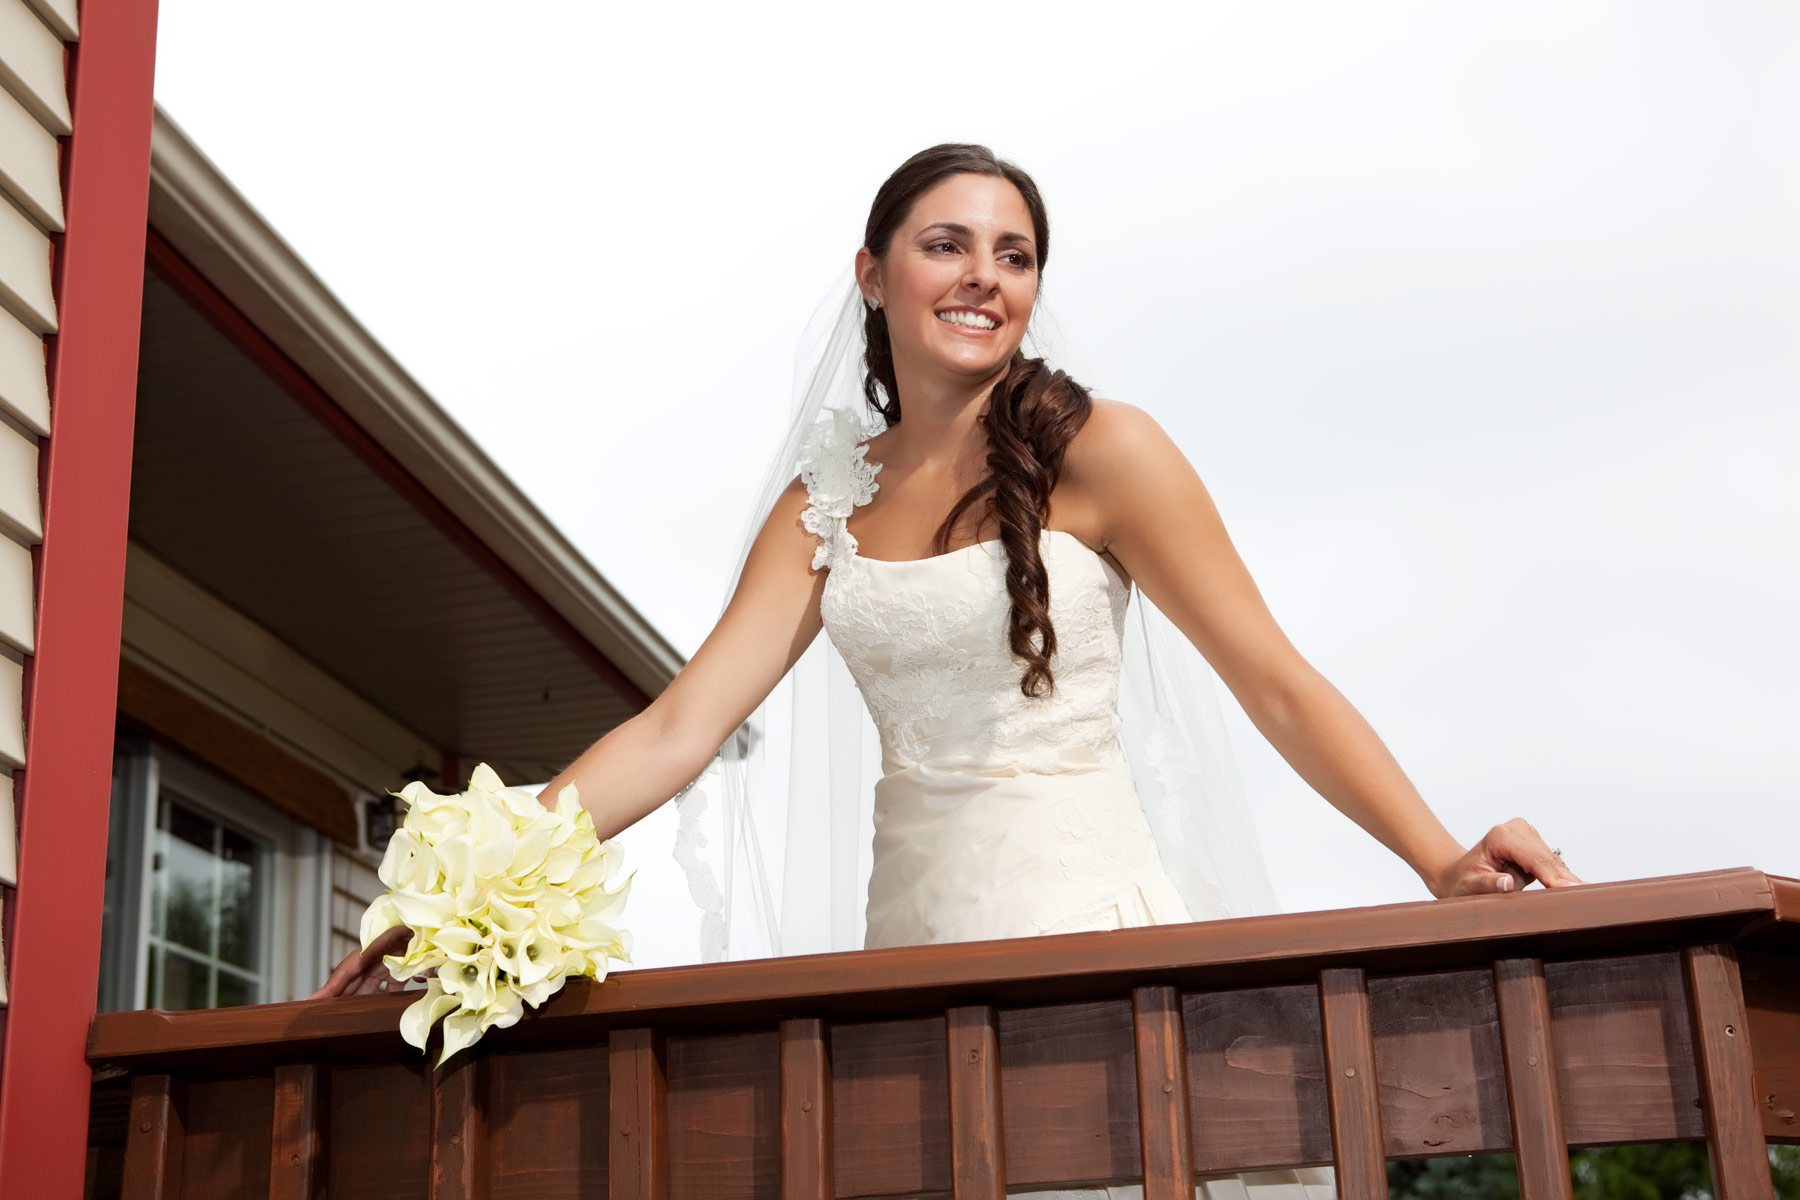 Bride at the porch